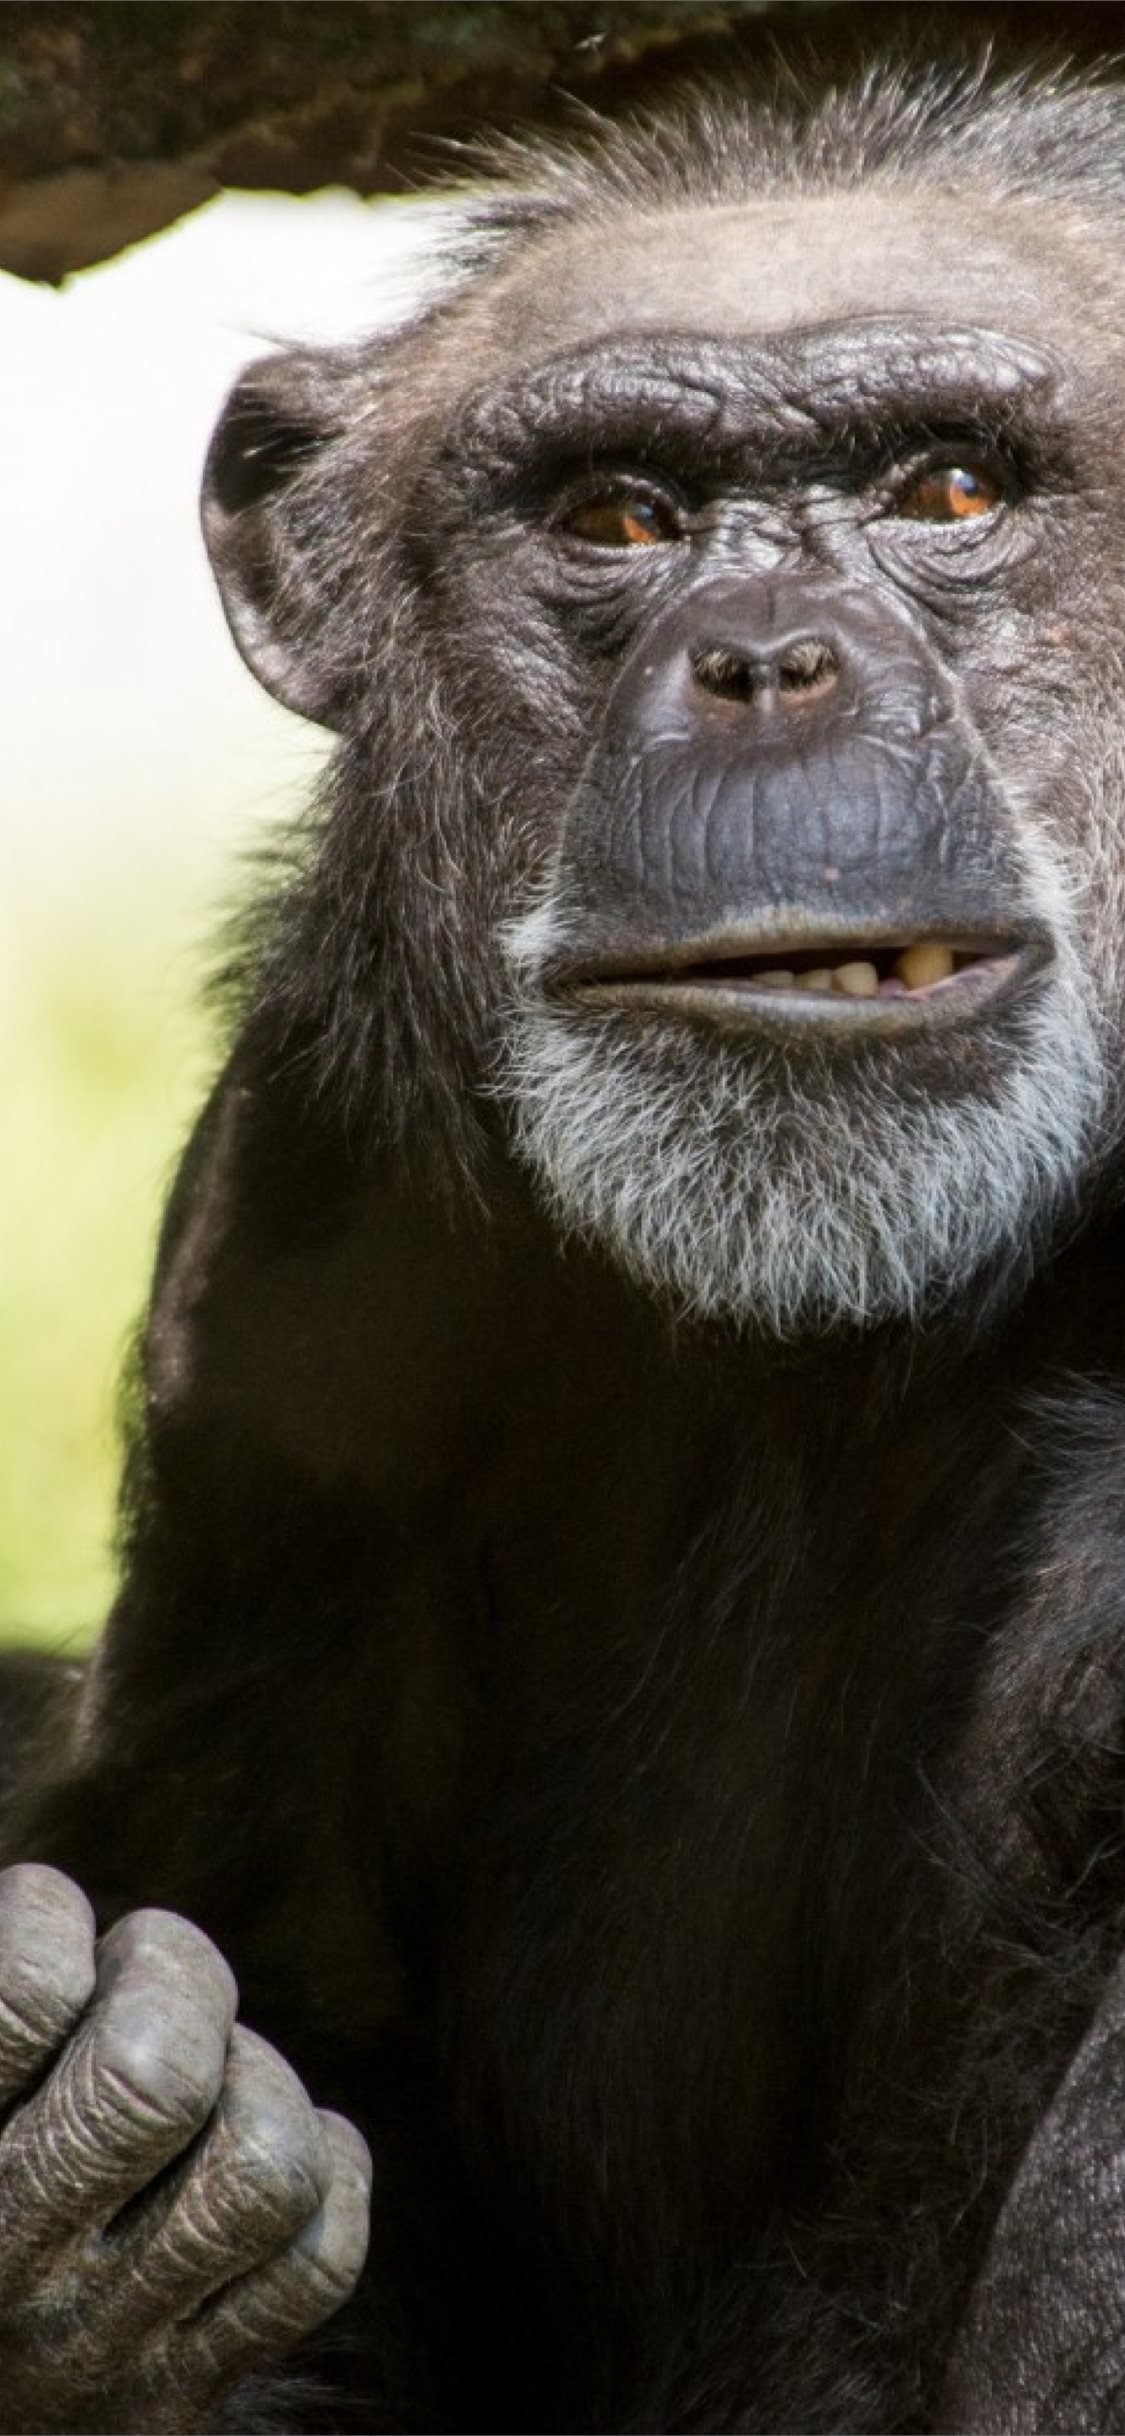 chimpanzee iPhone Wallpaper Free Download